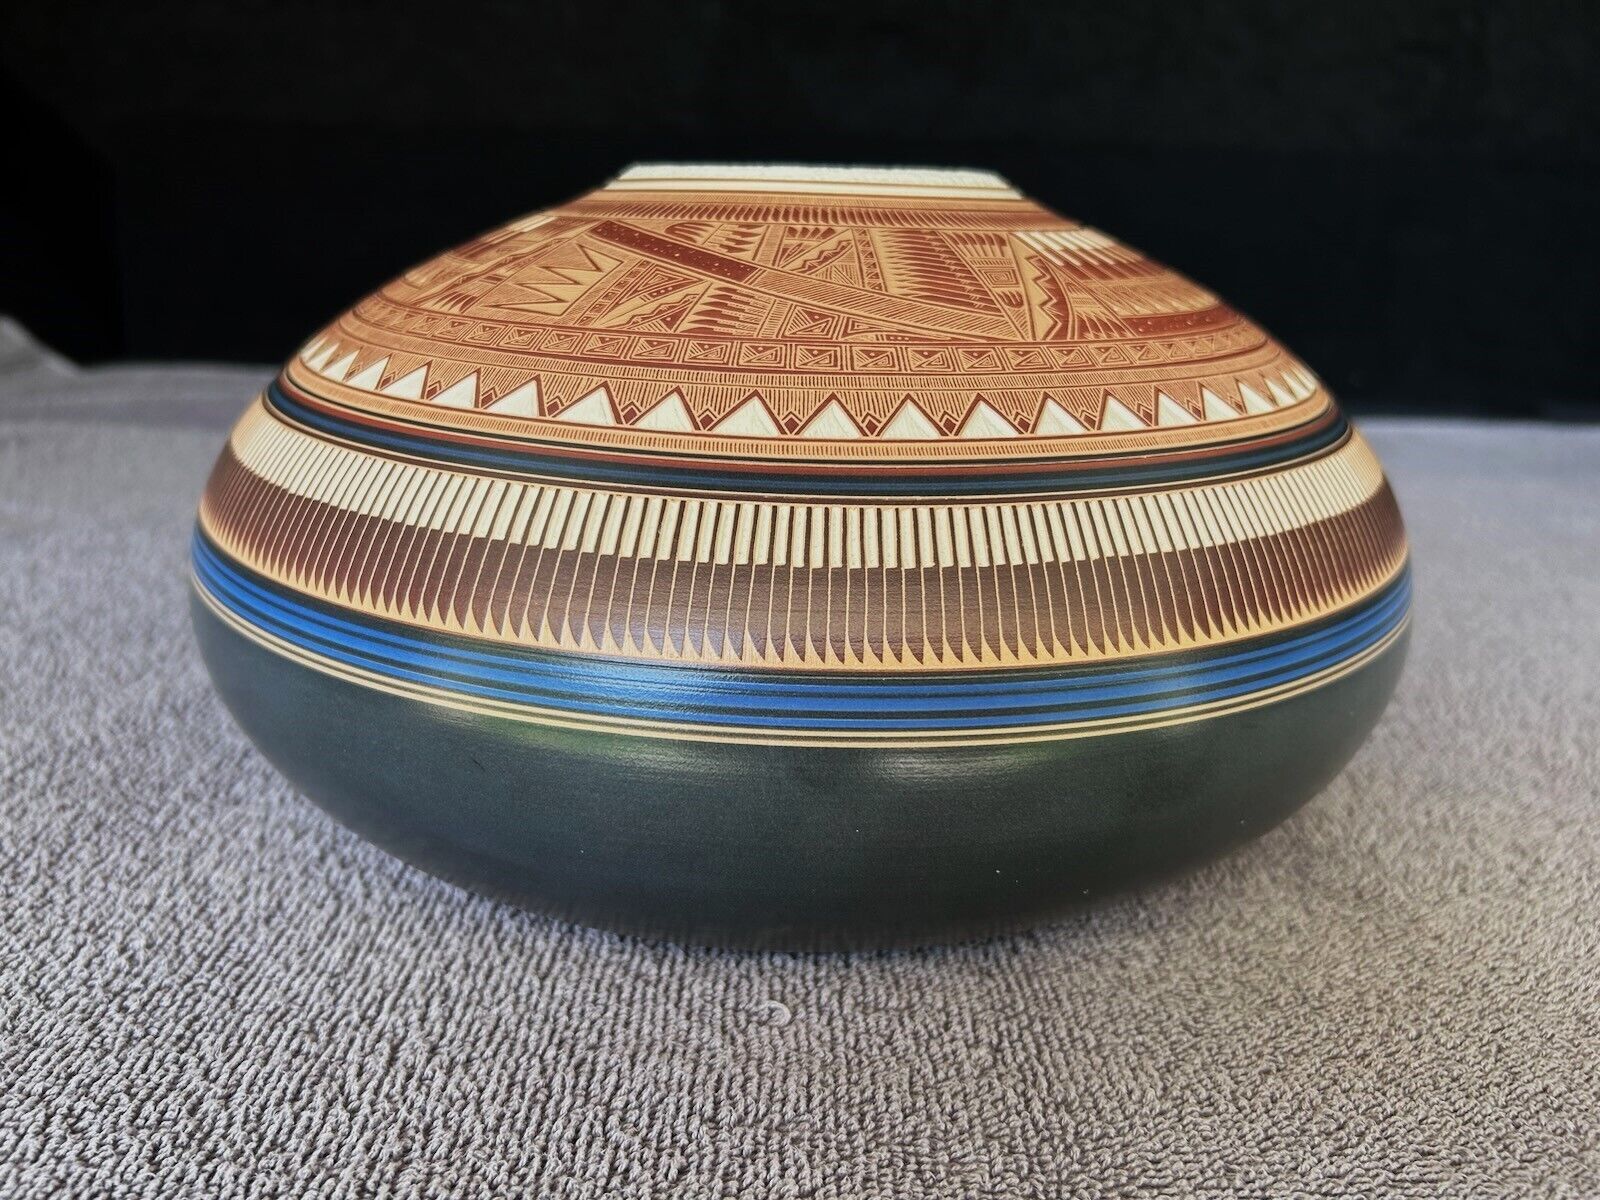 Authentic Fine Navajo Pot by Famed Artist Robert Lansing